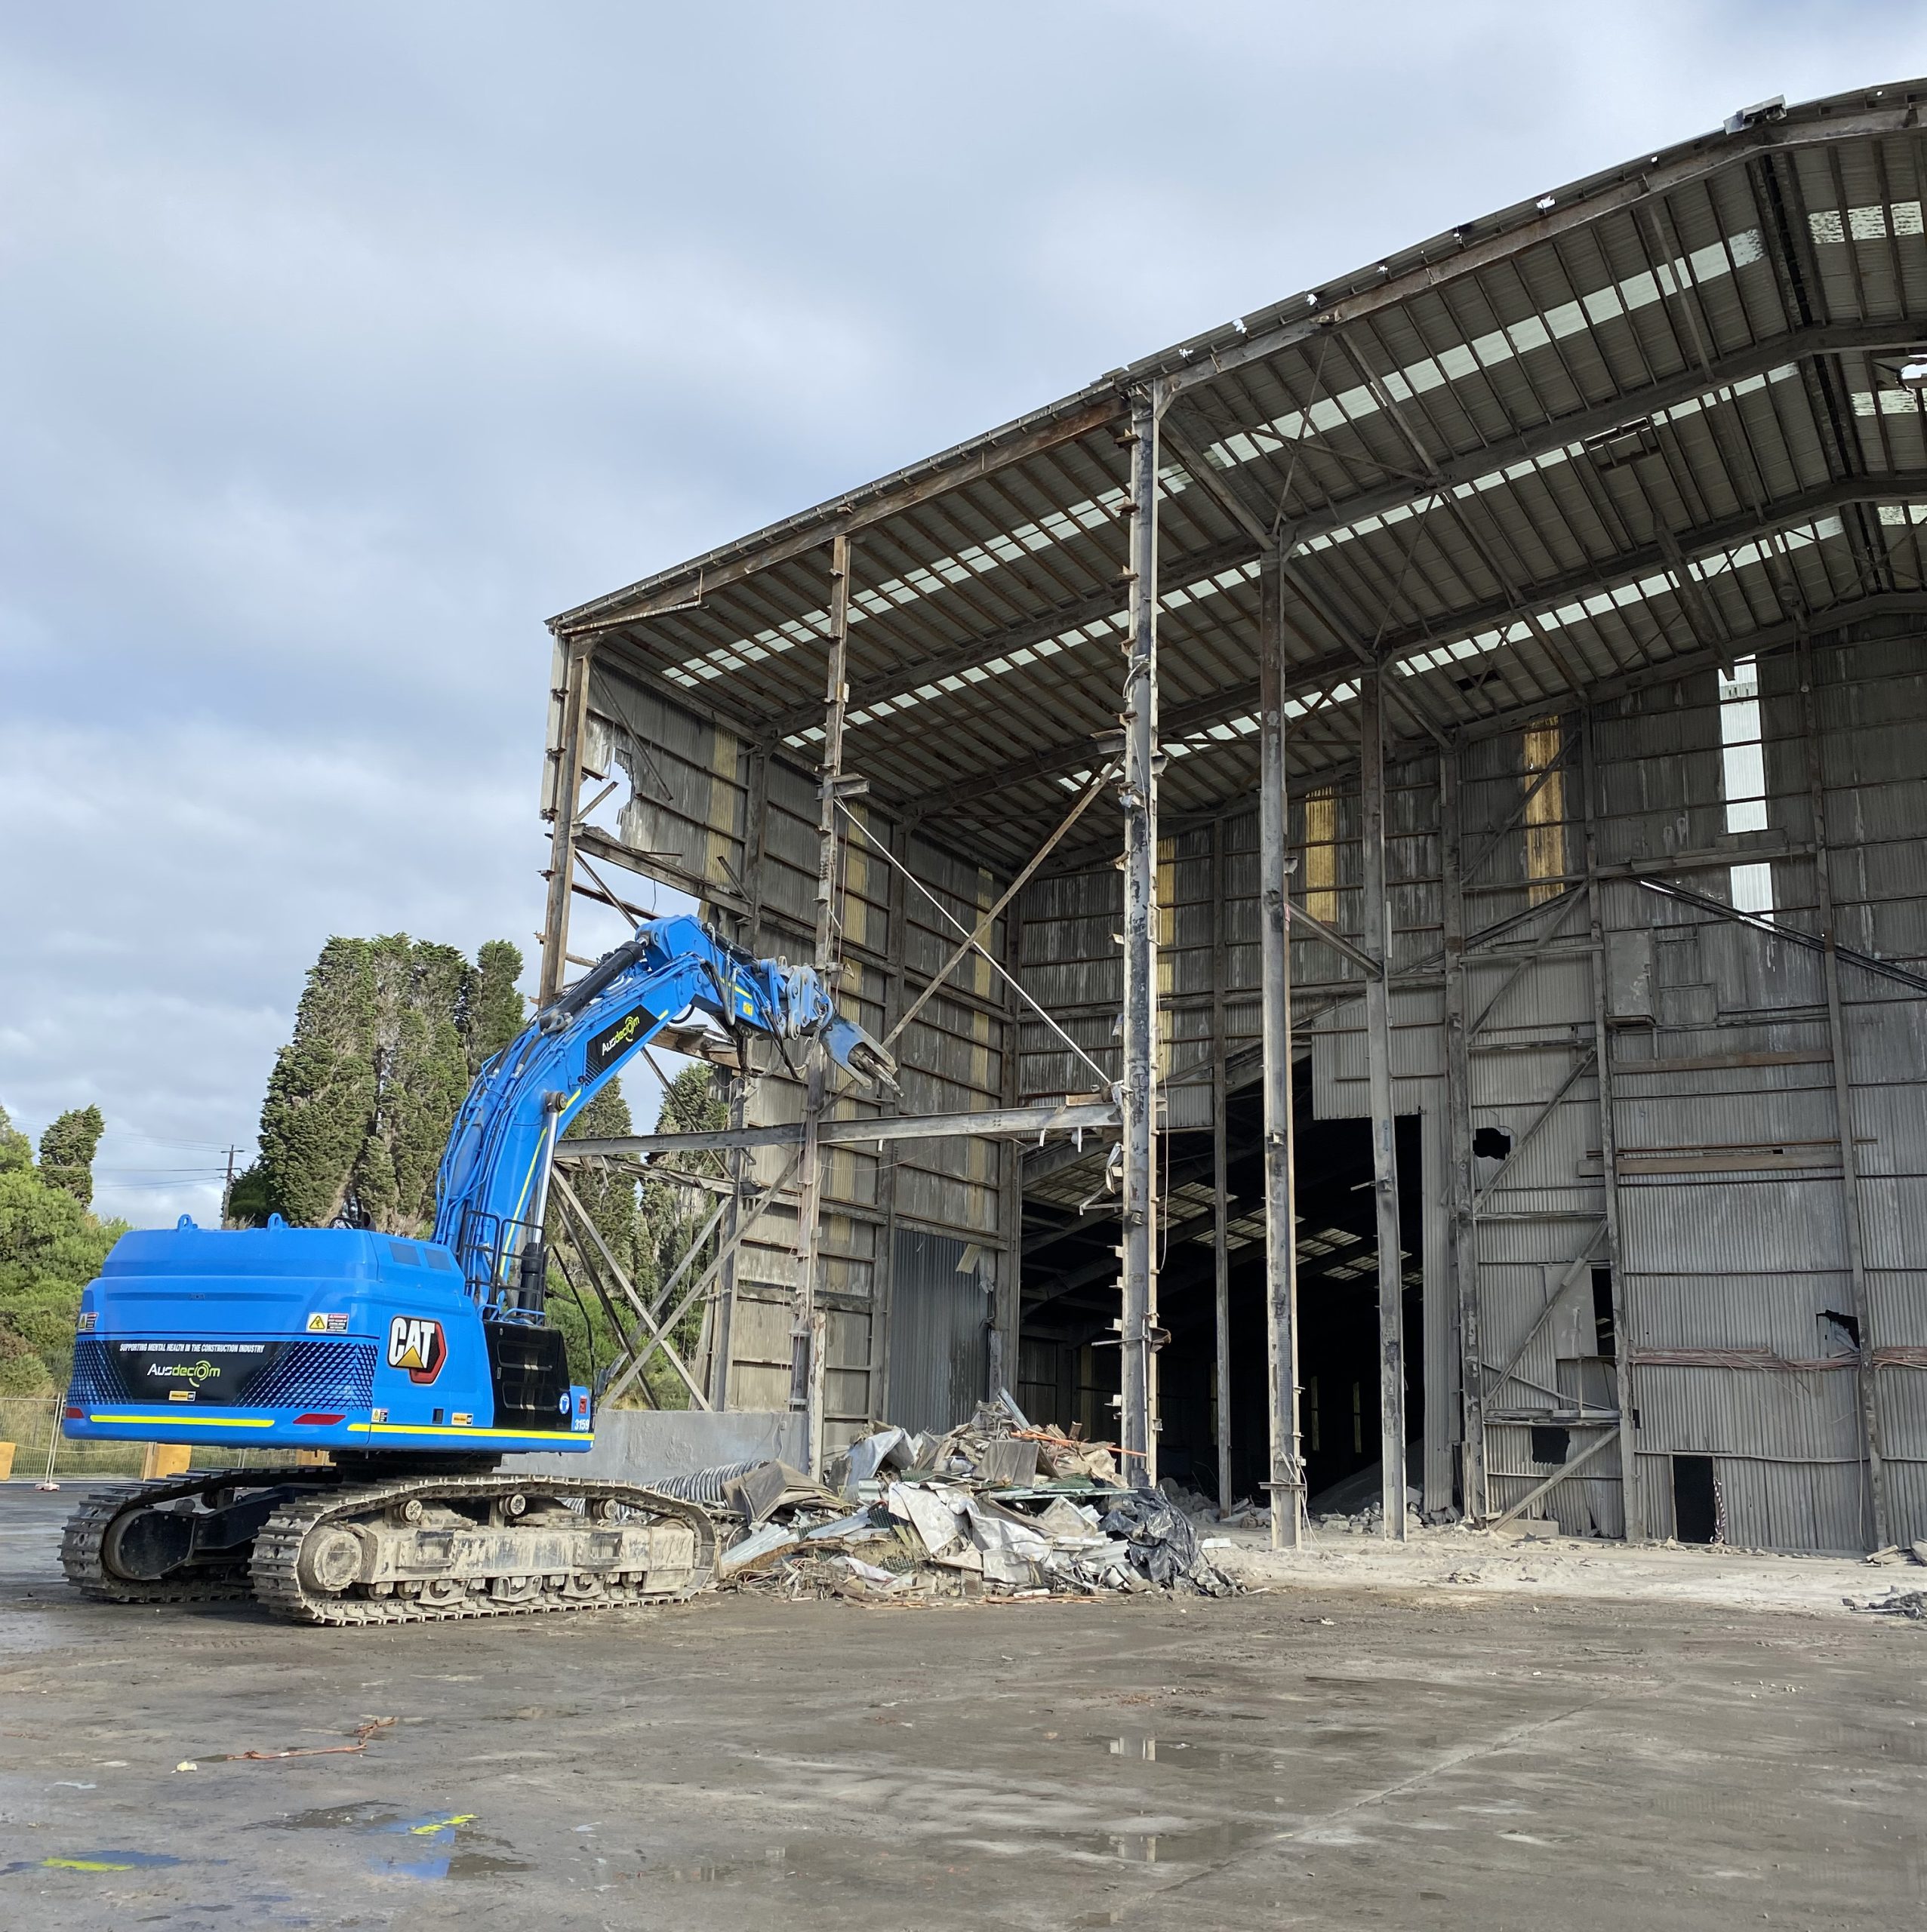 Ausdecom's Big Blue Excavator Demolishing Shed